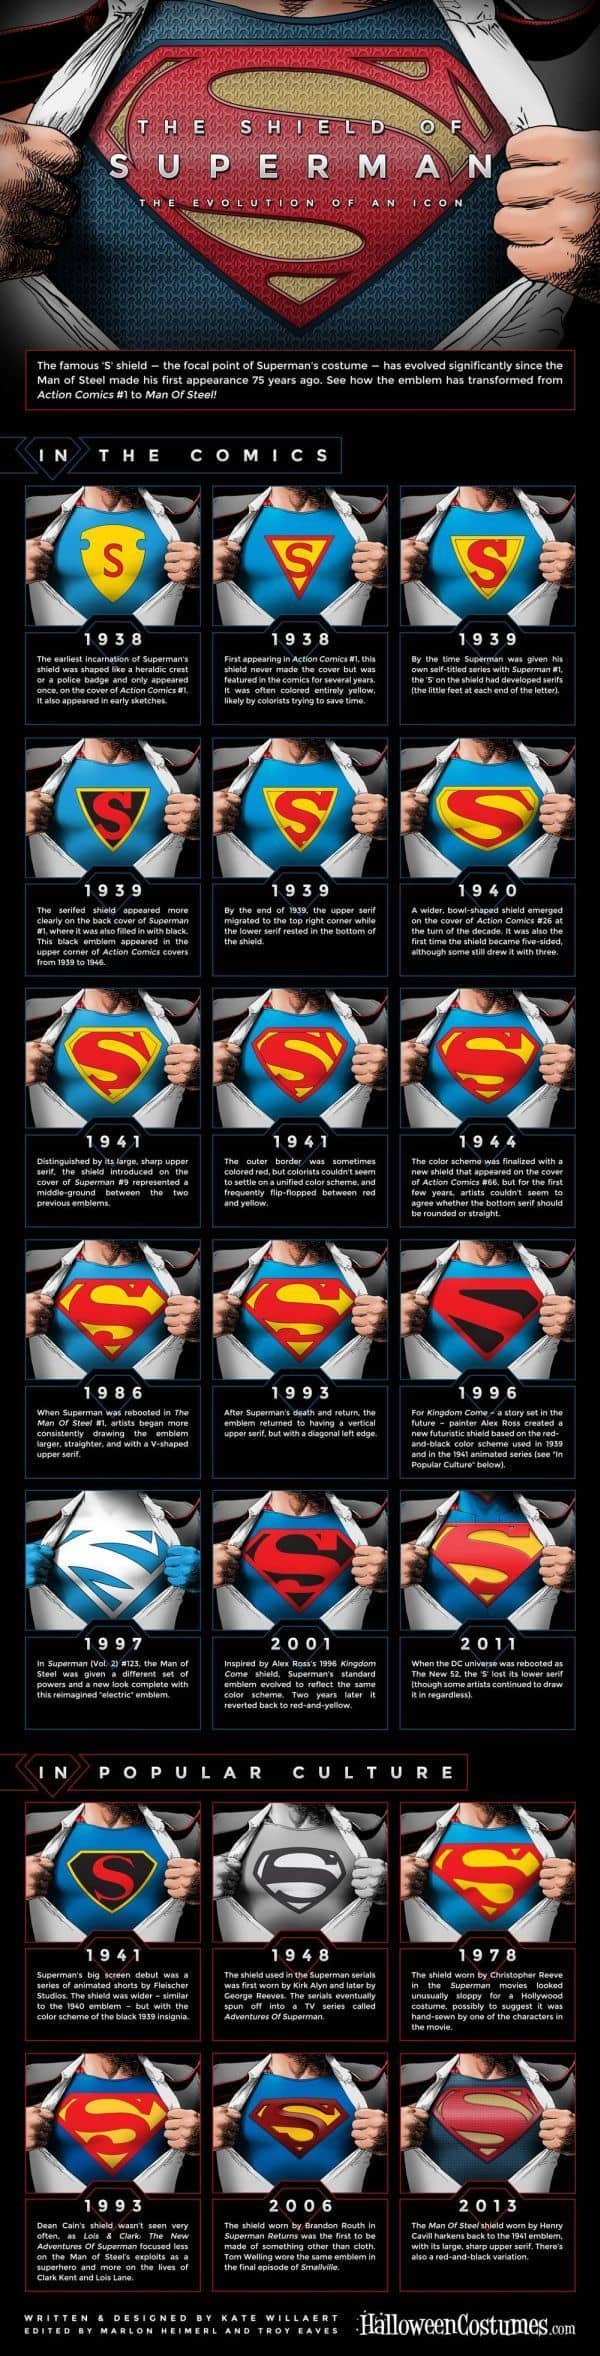 Evolution of the Superman logo